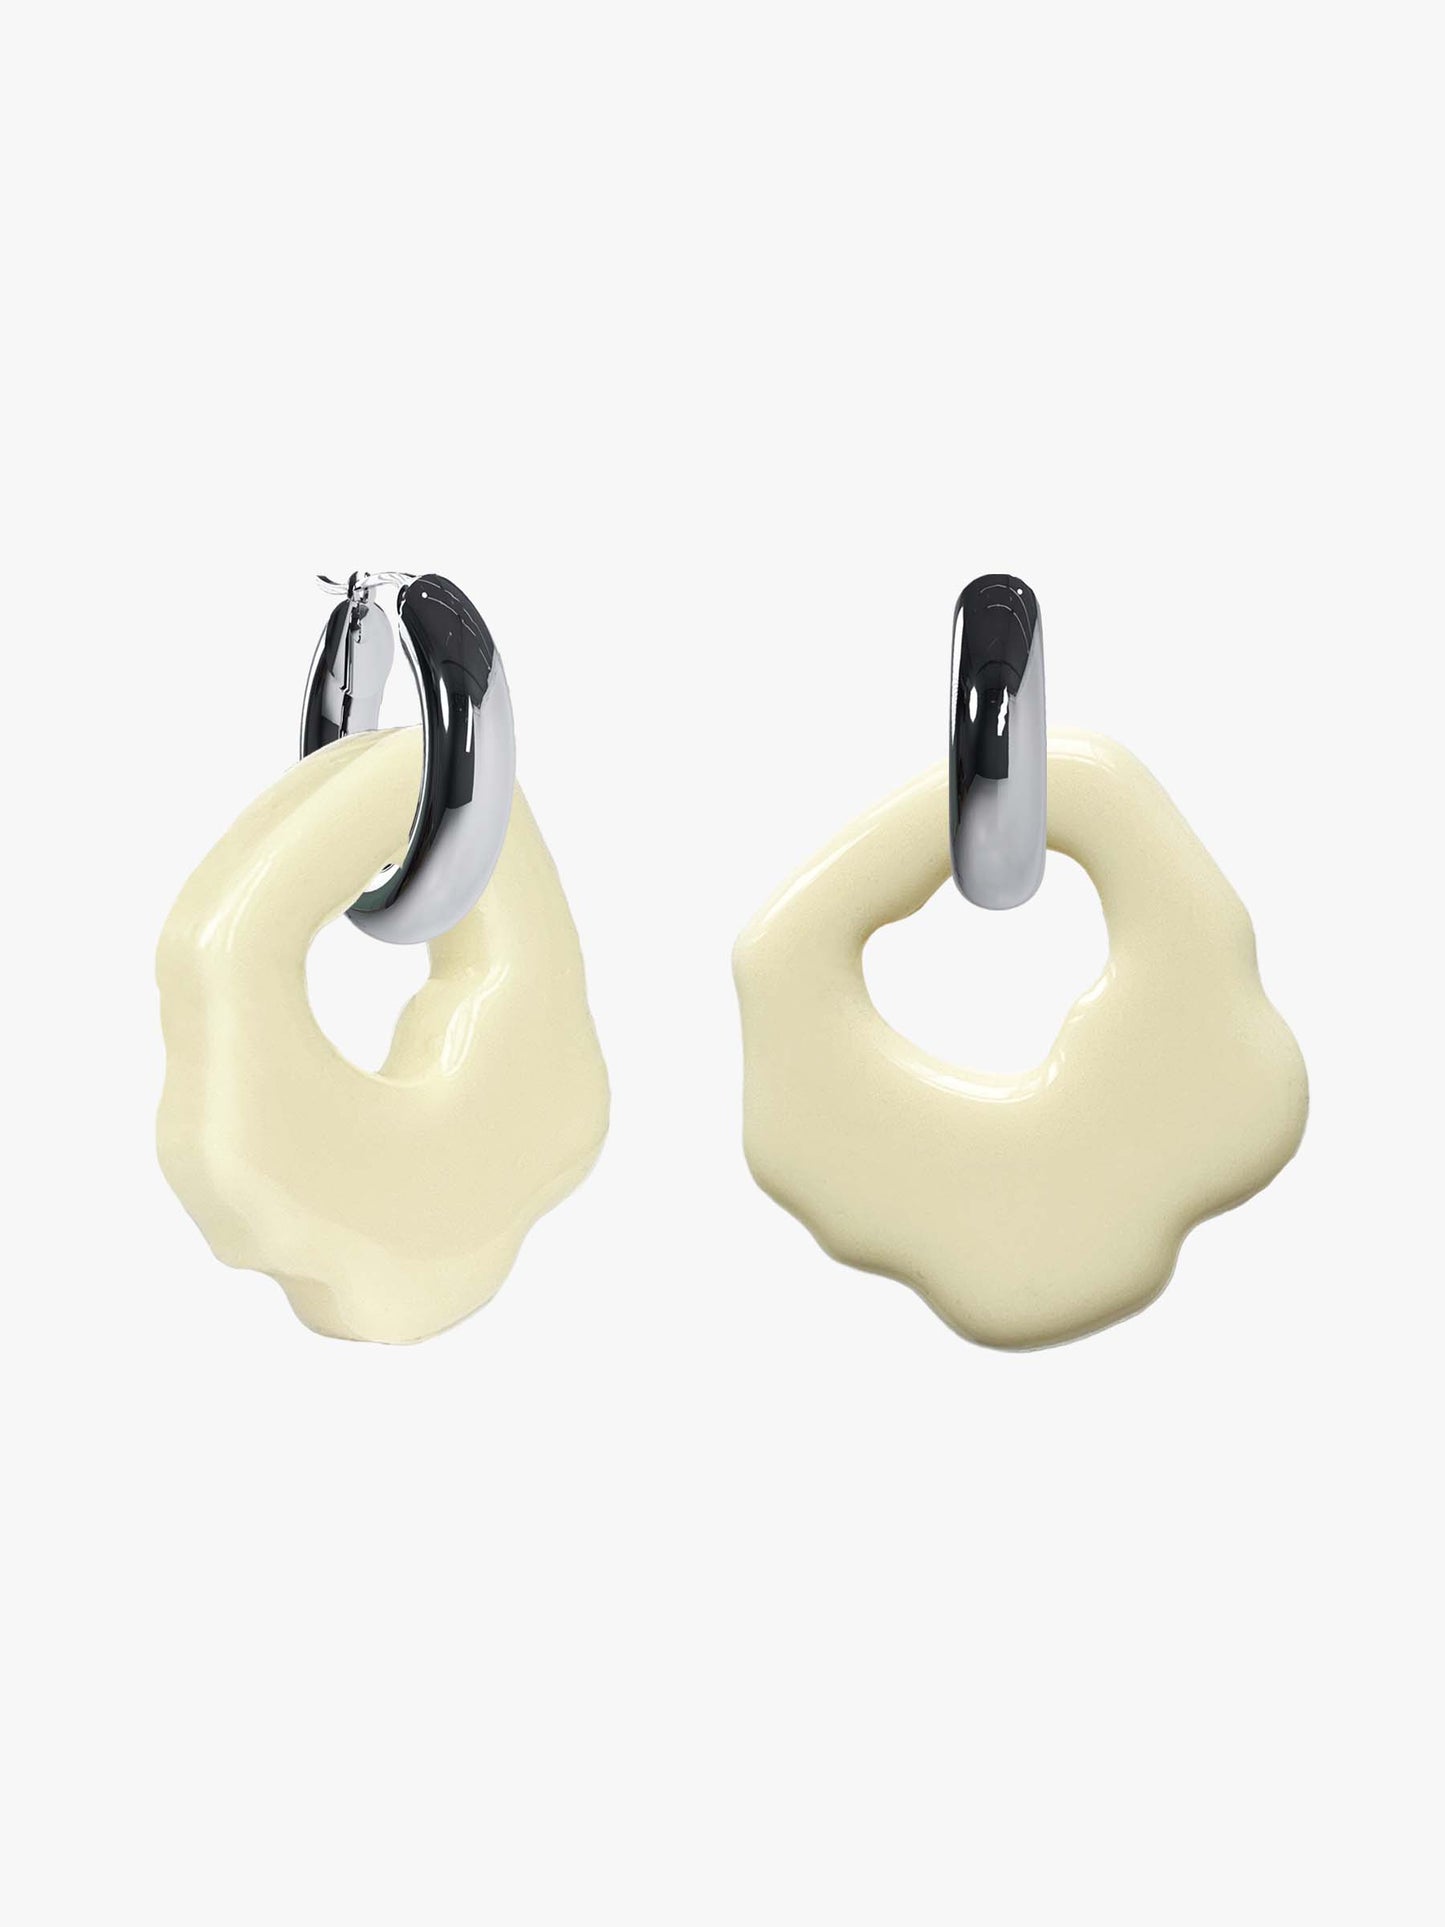 Abe white silver earring (pair)